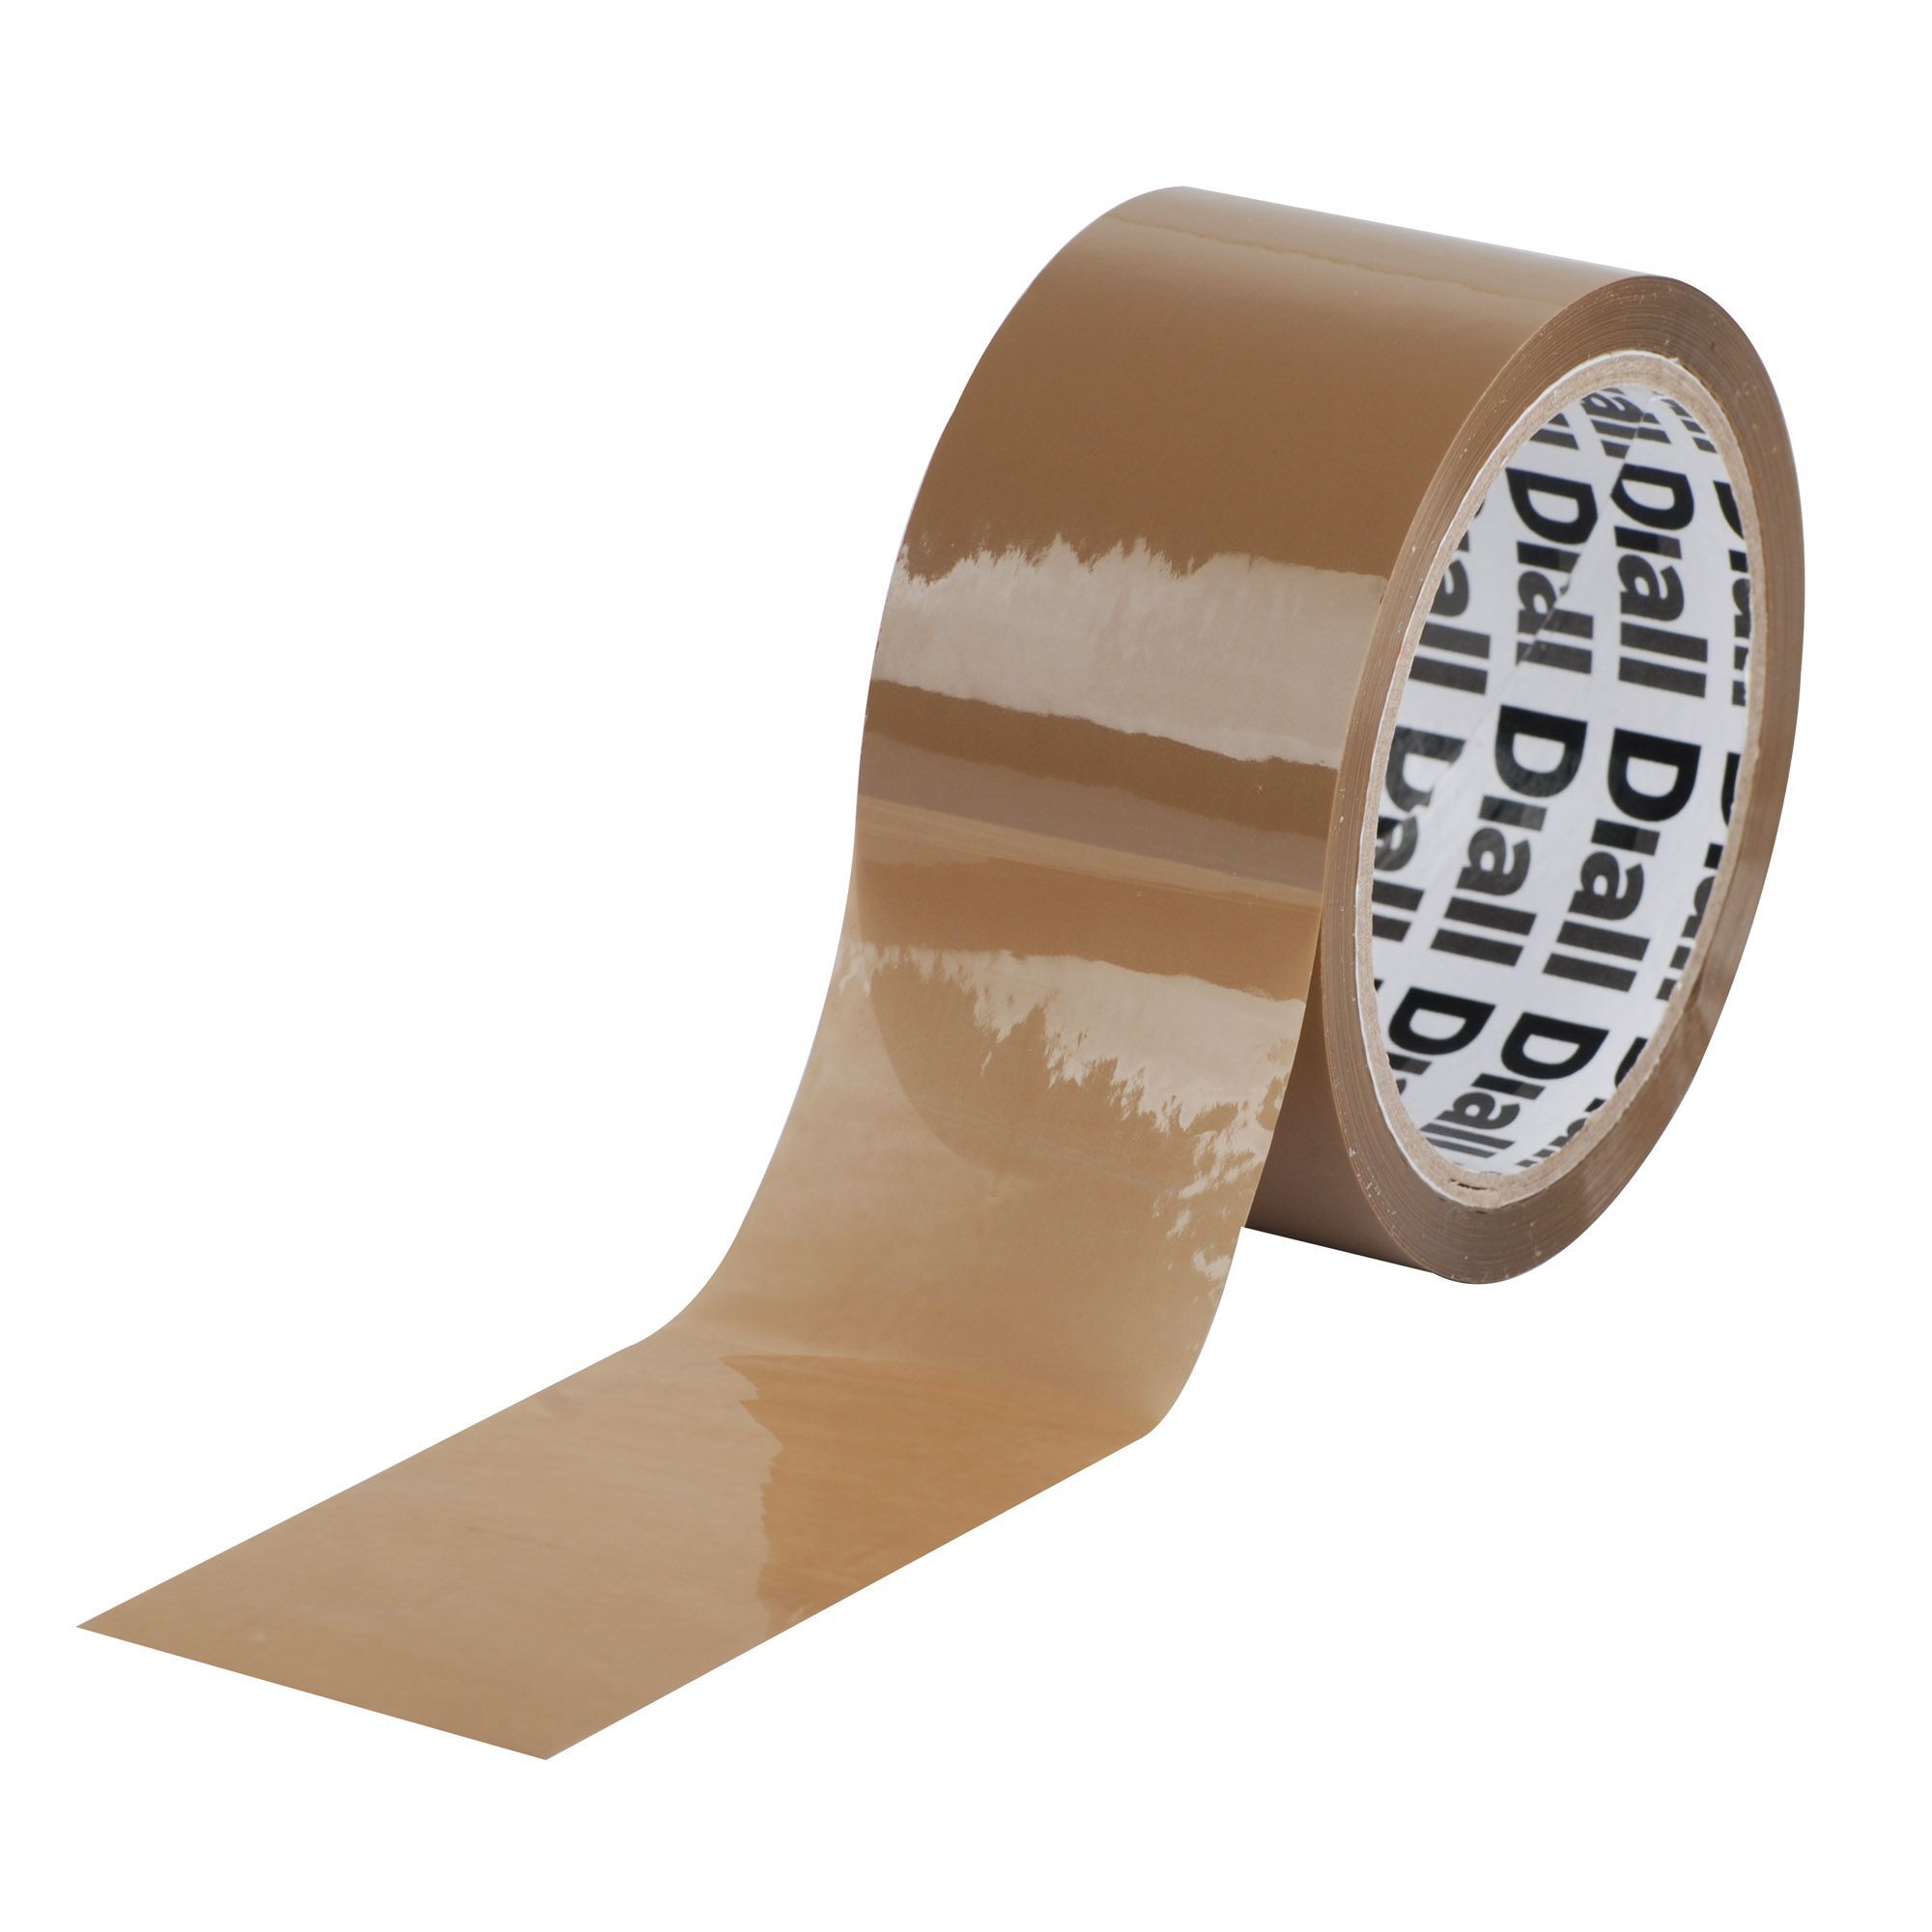 Duck Tape All Purpose PackagingTape - 50mm x 25m - Self Adhesive - Brown